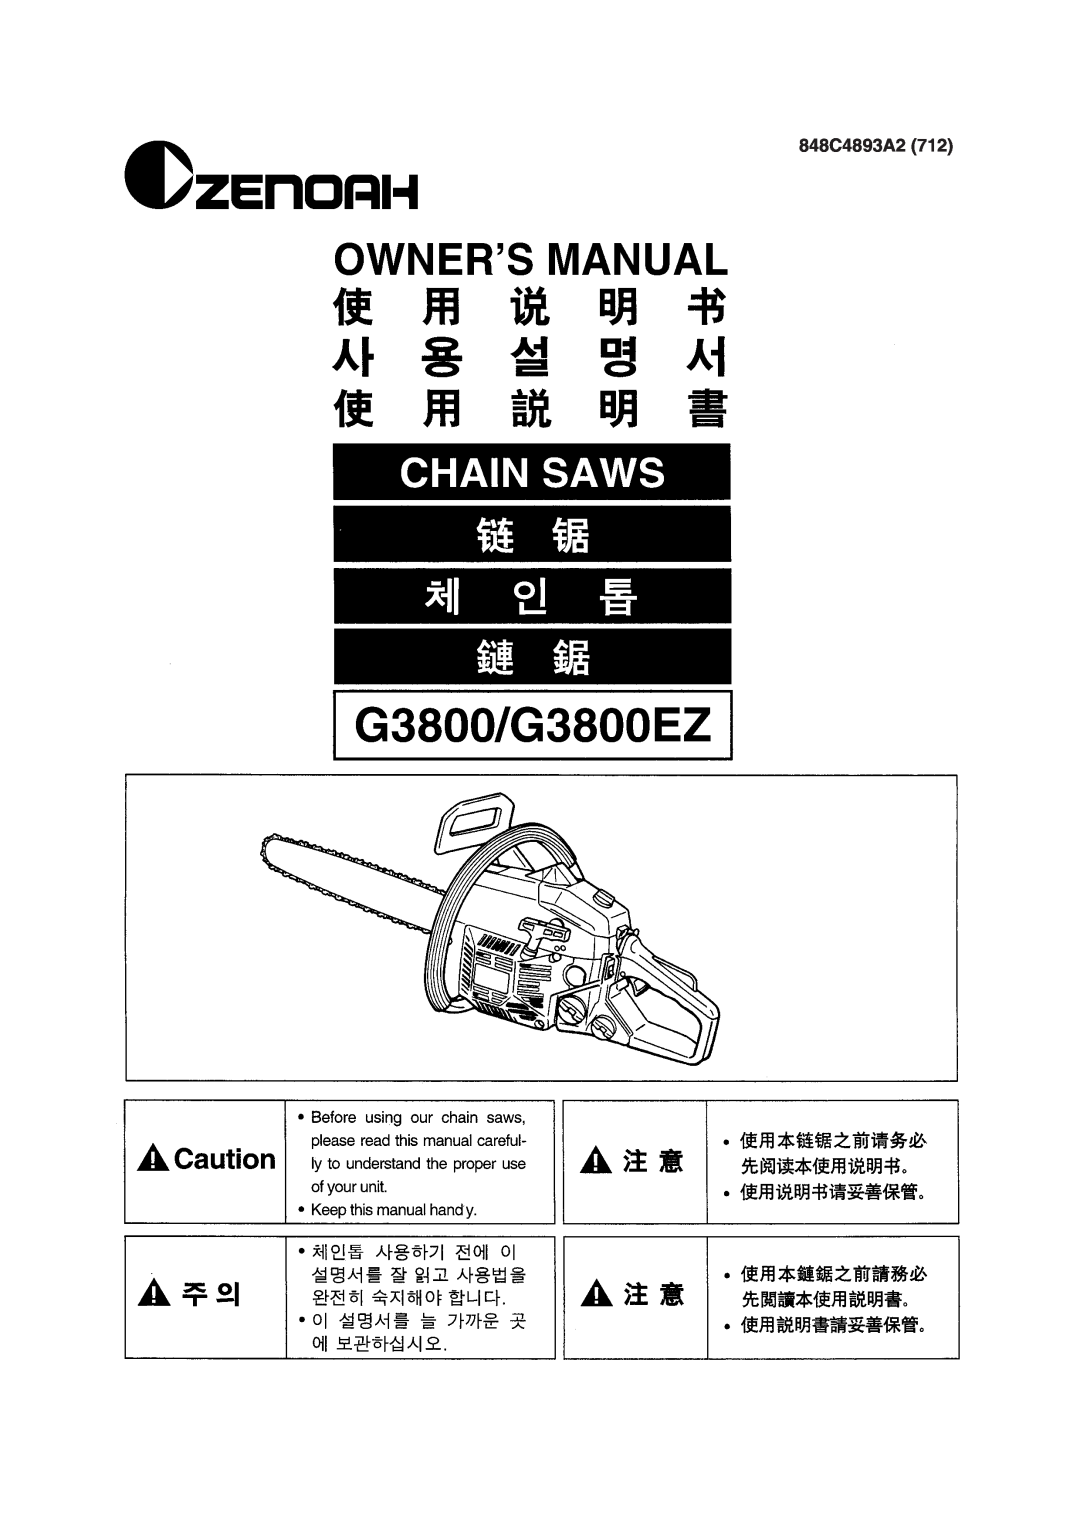 Zenoah G3800/G3800EZ manual 848C4893A2 